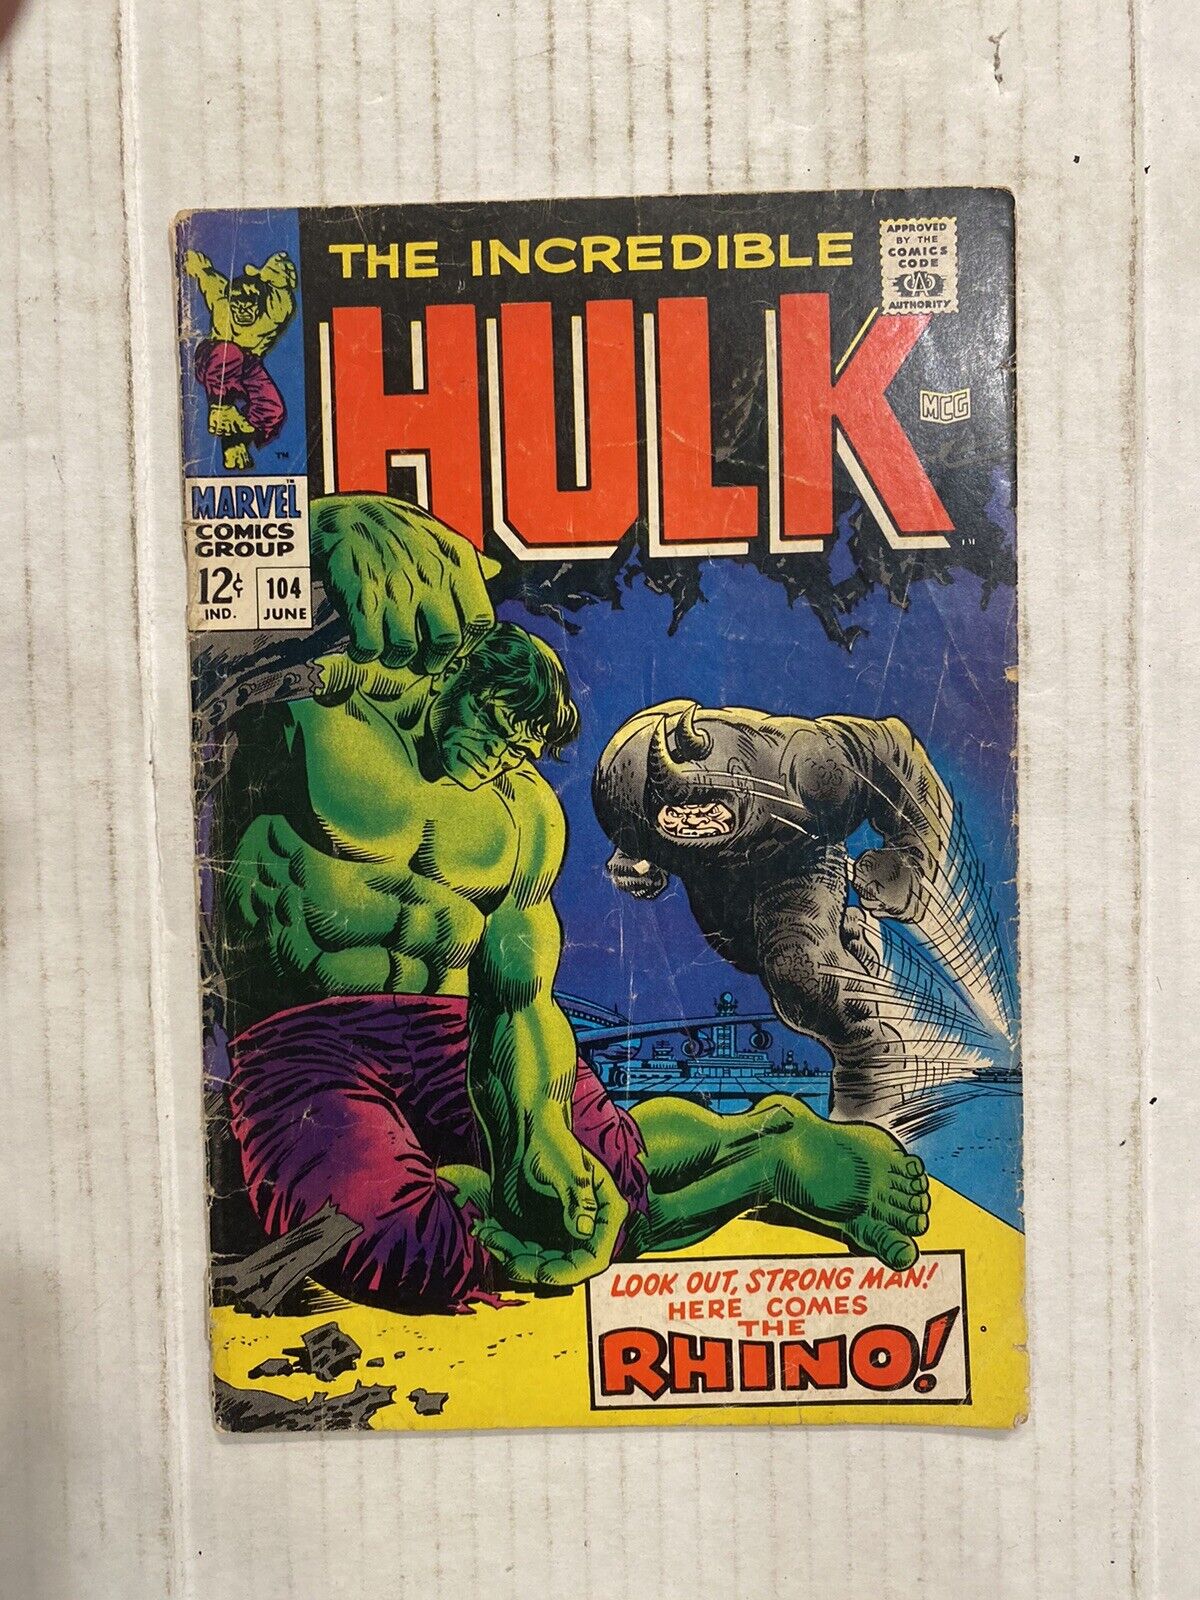 1968 INCREDIBLE HULK ISSUE #104 COMIC BOOK COMPLETE Hulk Vs Rhino Marvel Classic